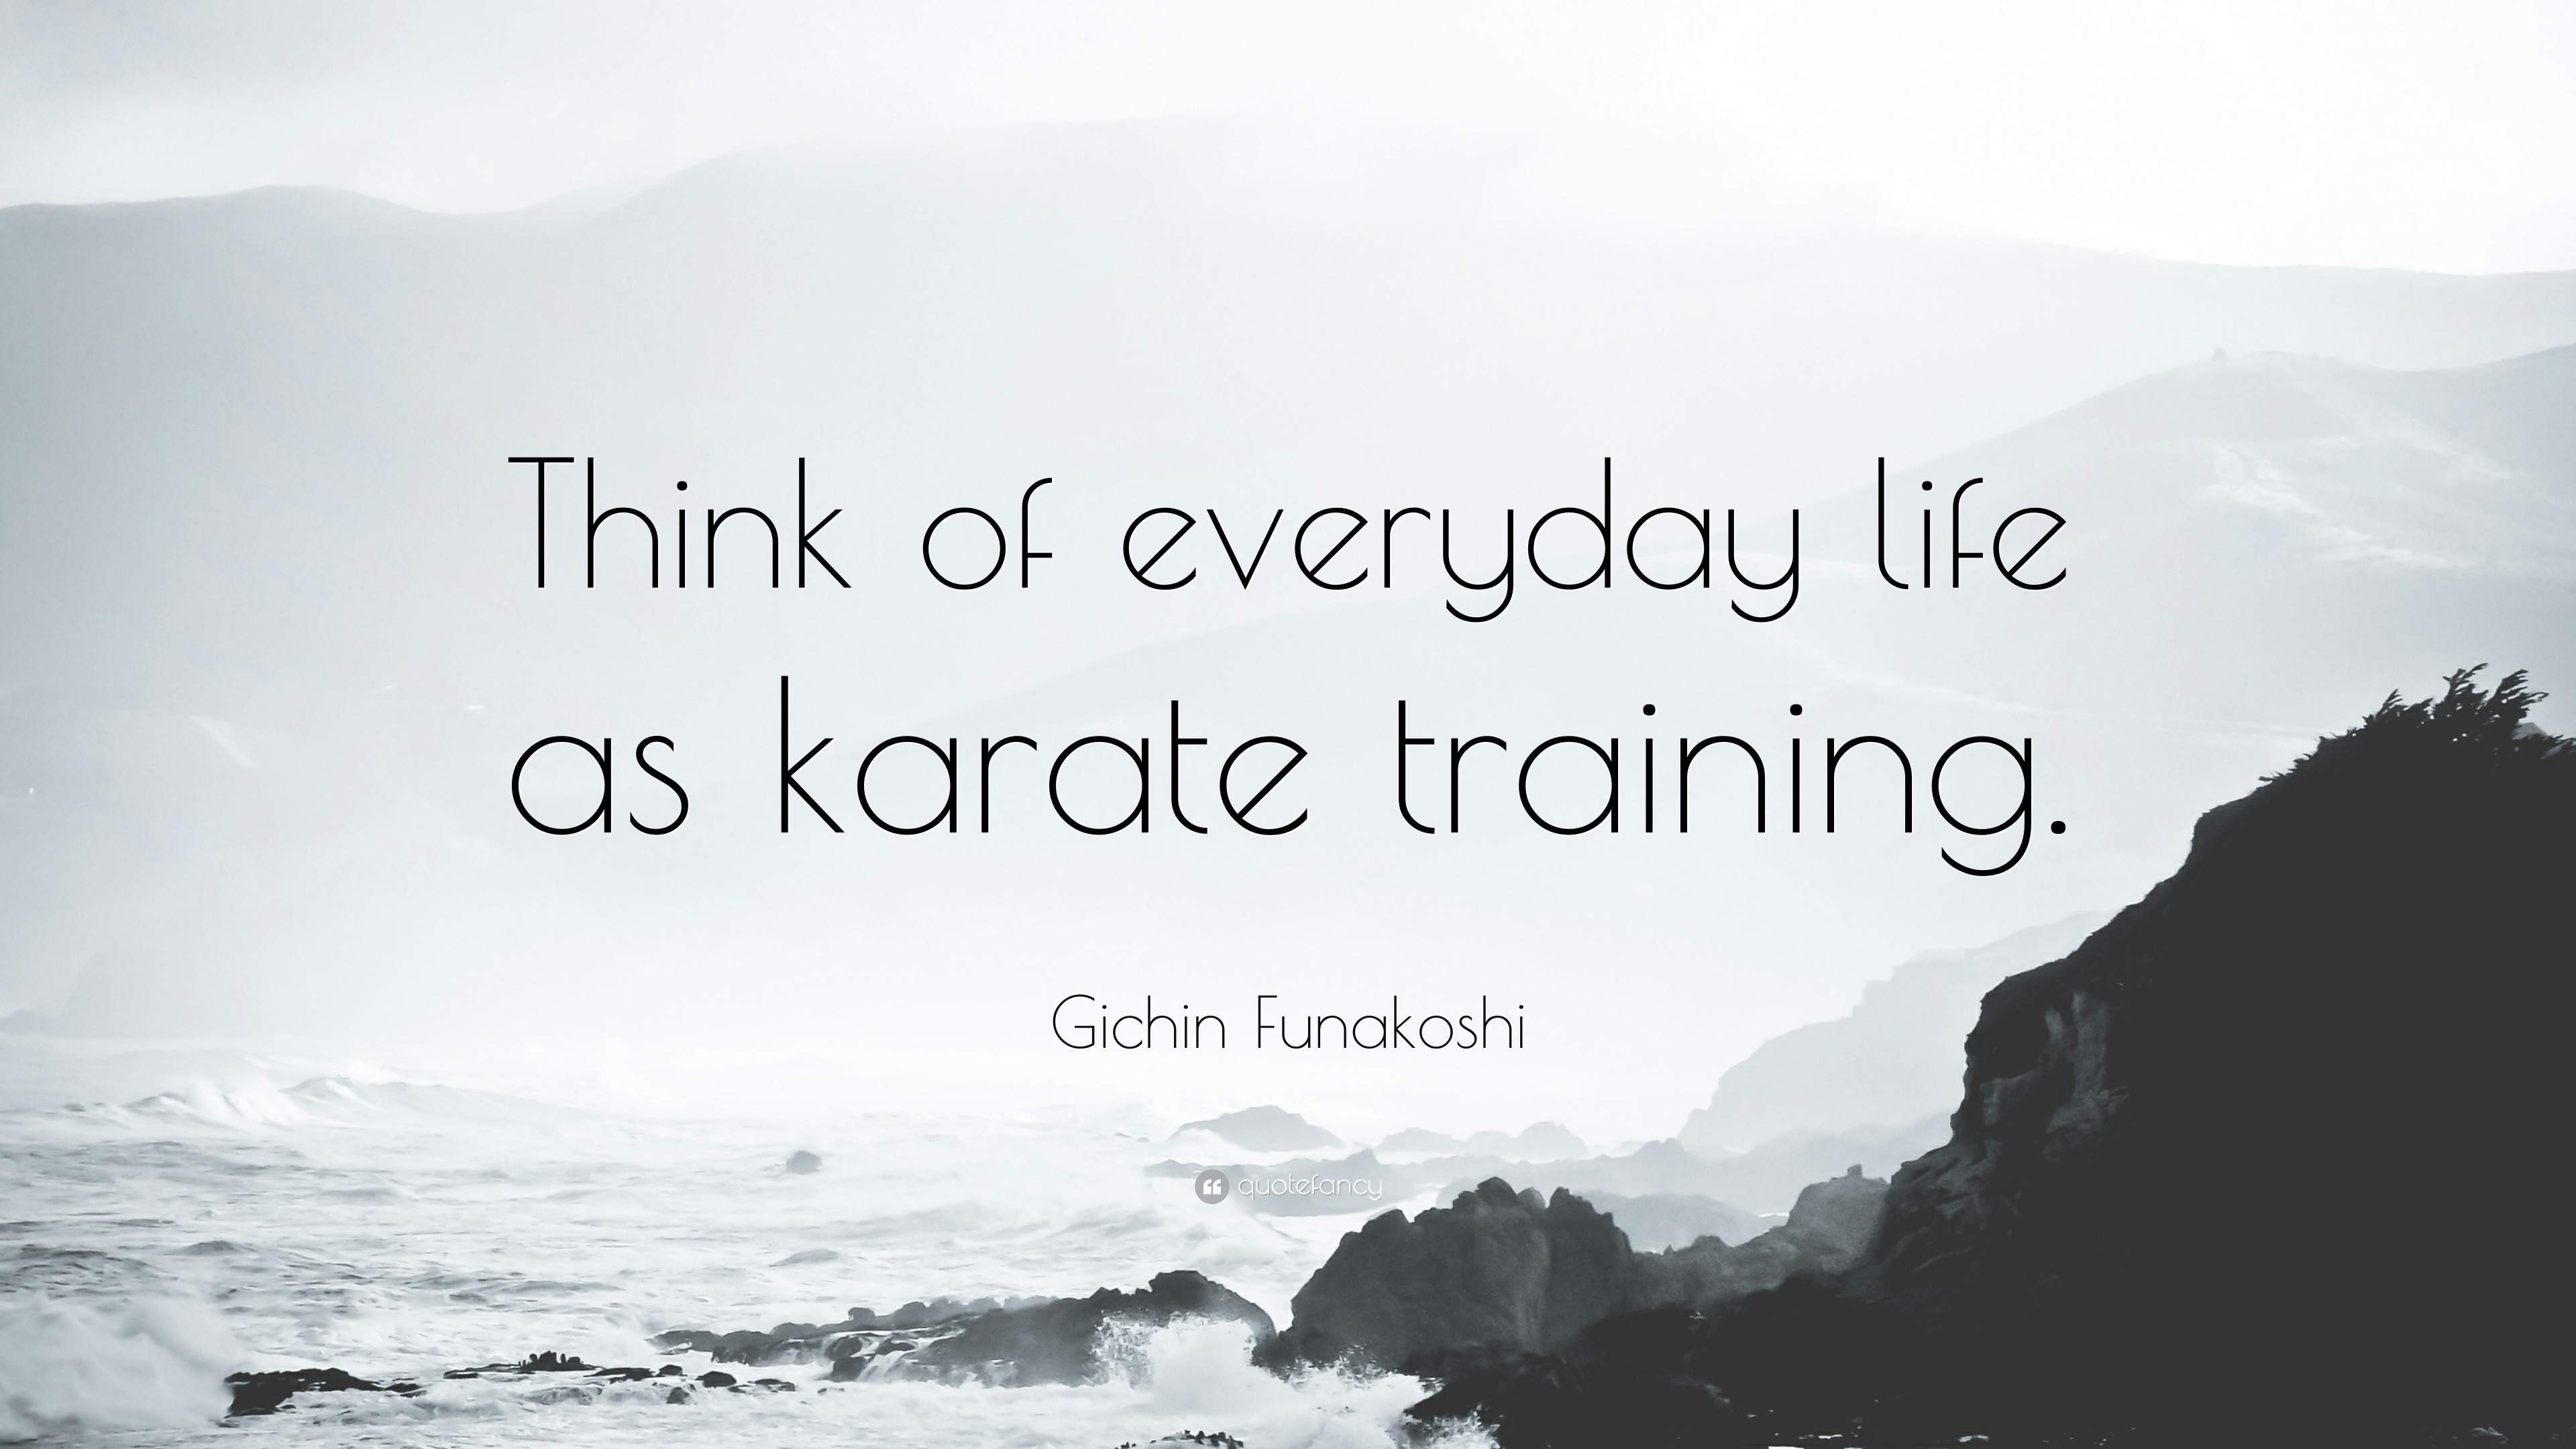 Gichin Funakoshi Quote: “Think of everyday life as karate training.”